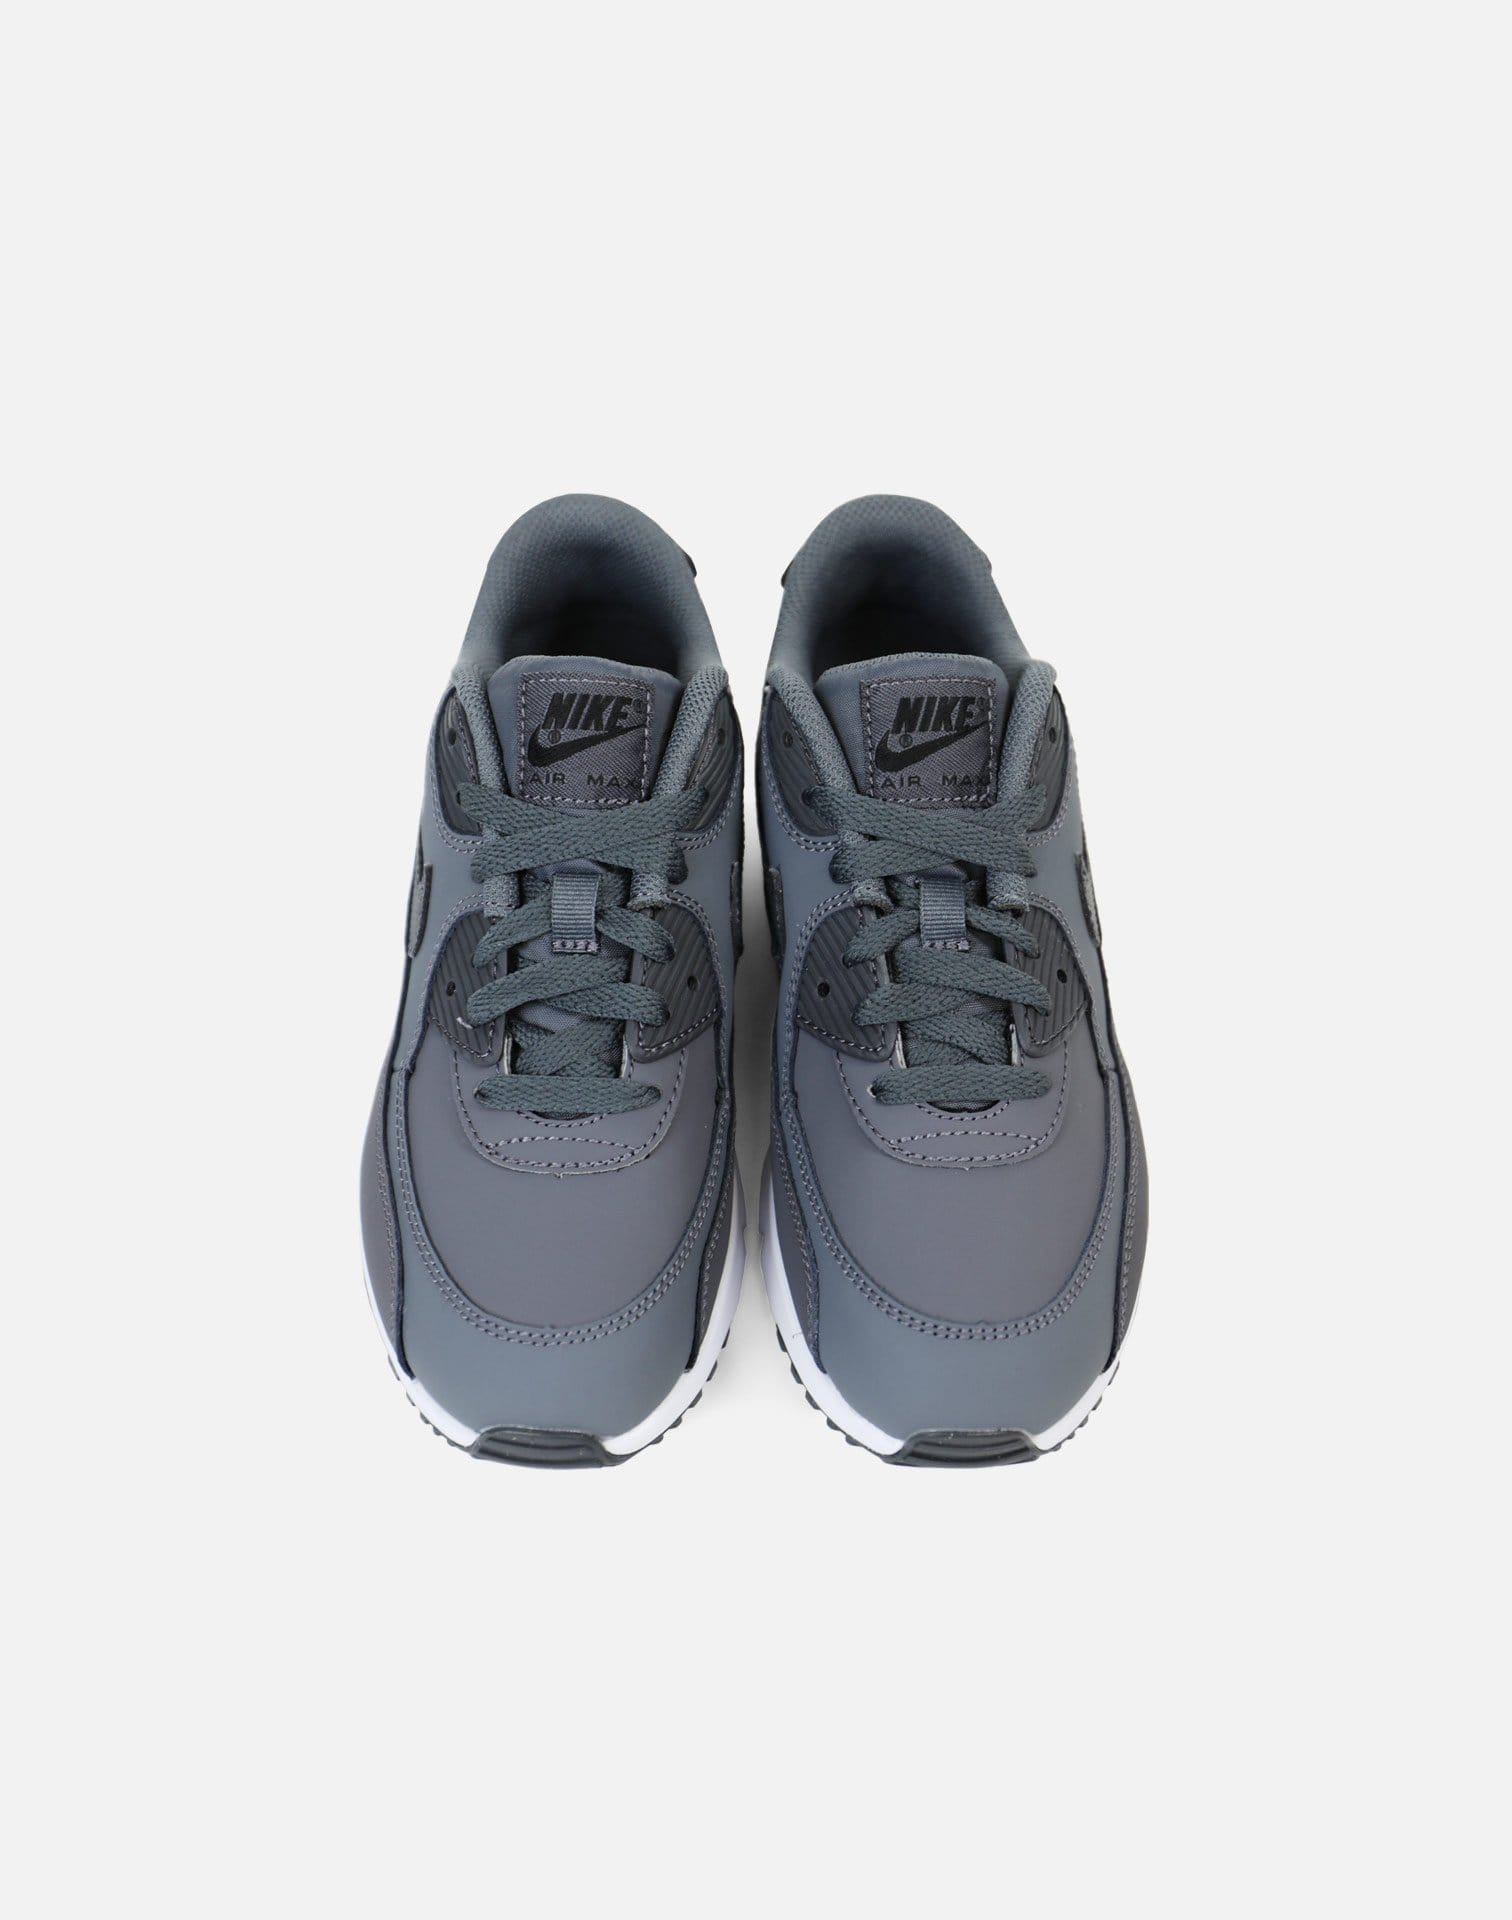 Nike Air Max 90 Leather Pre-School (Grey/White)